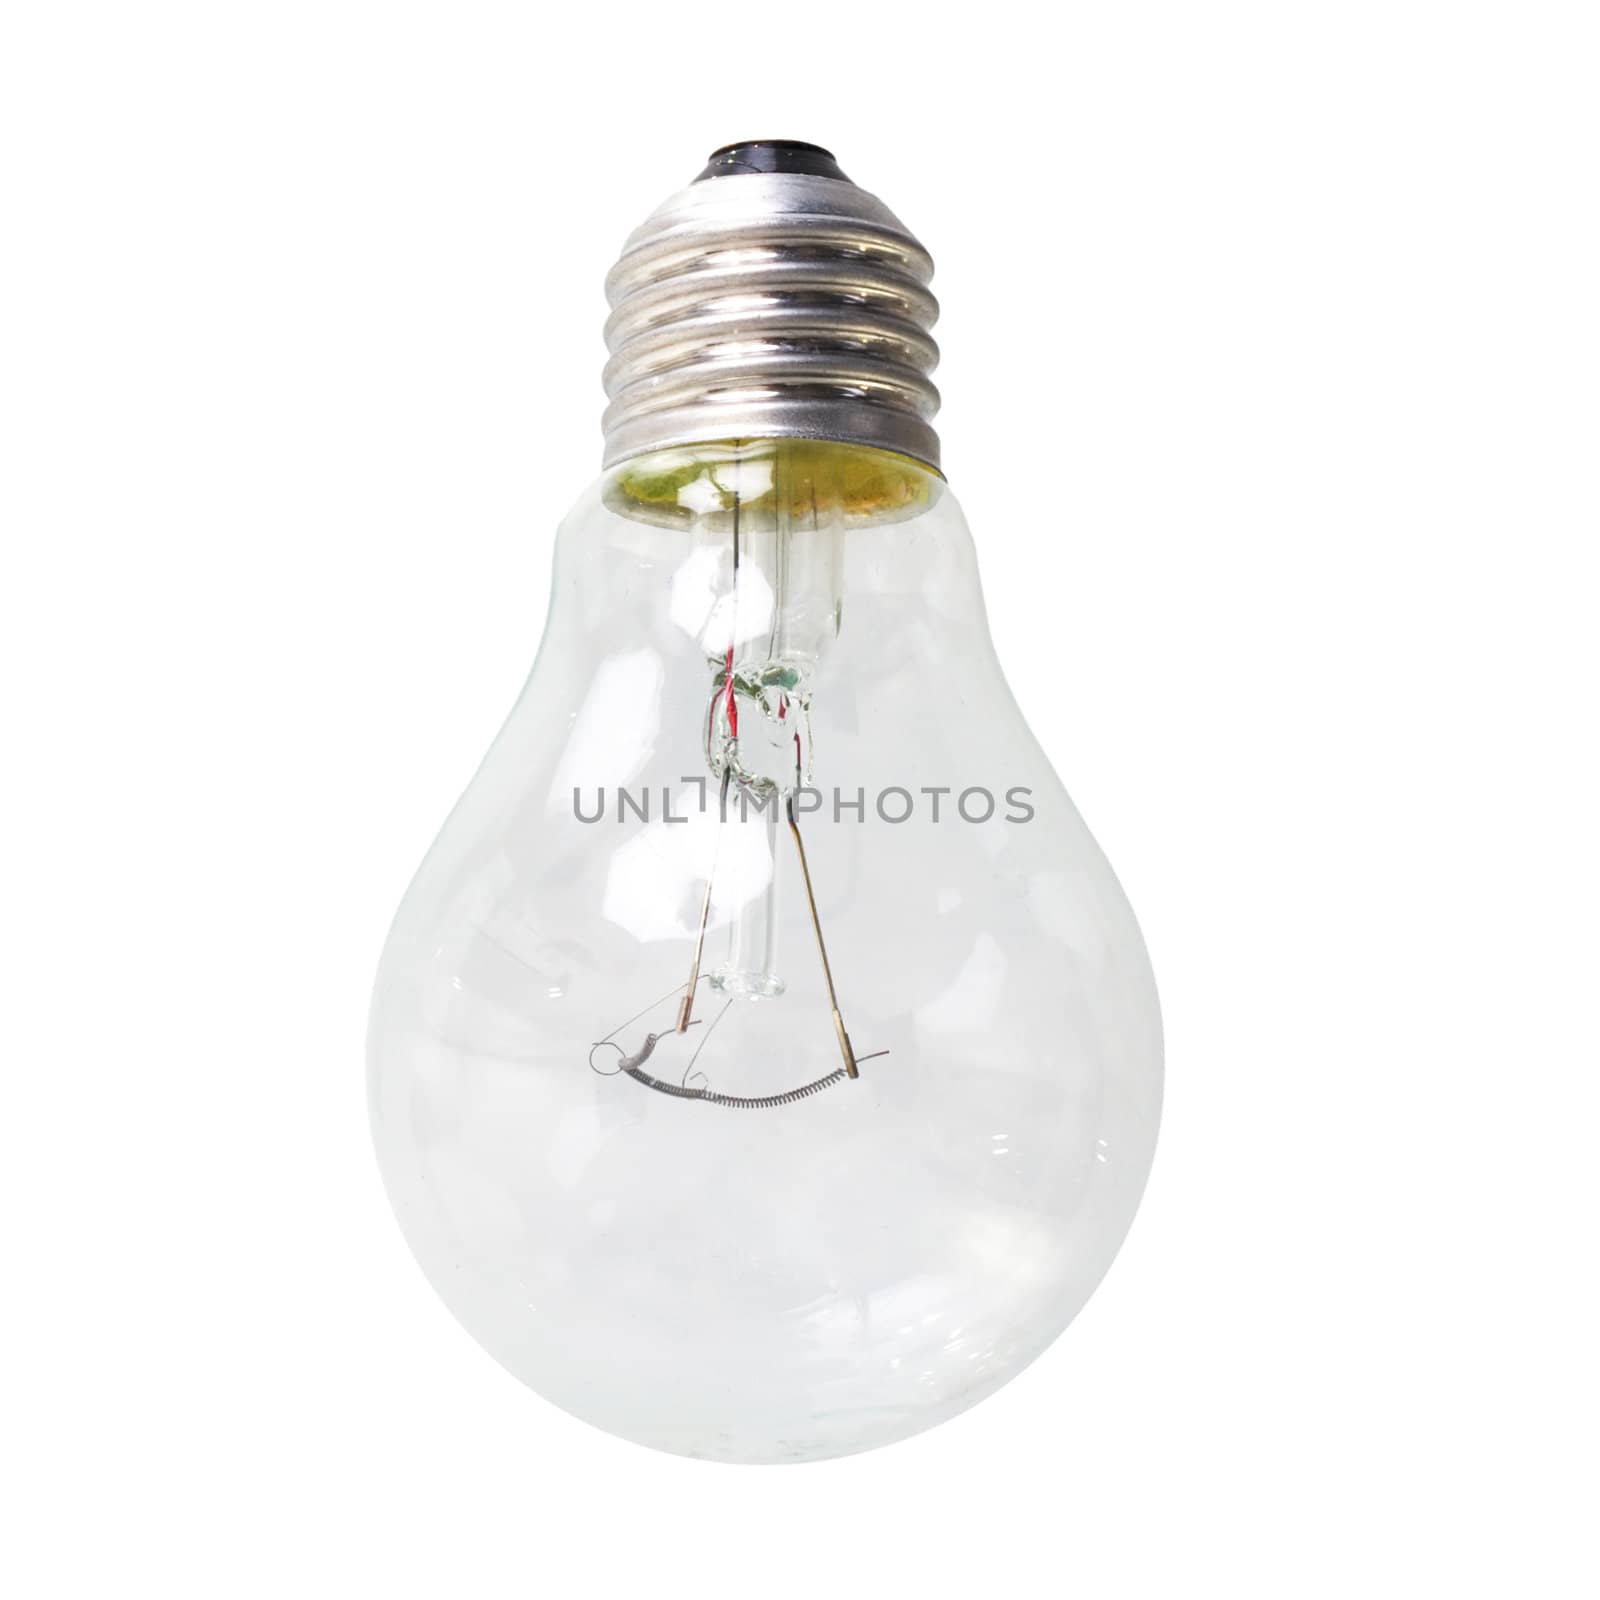 Light bulb by pzaxe